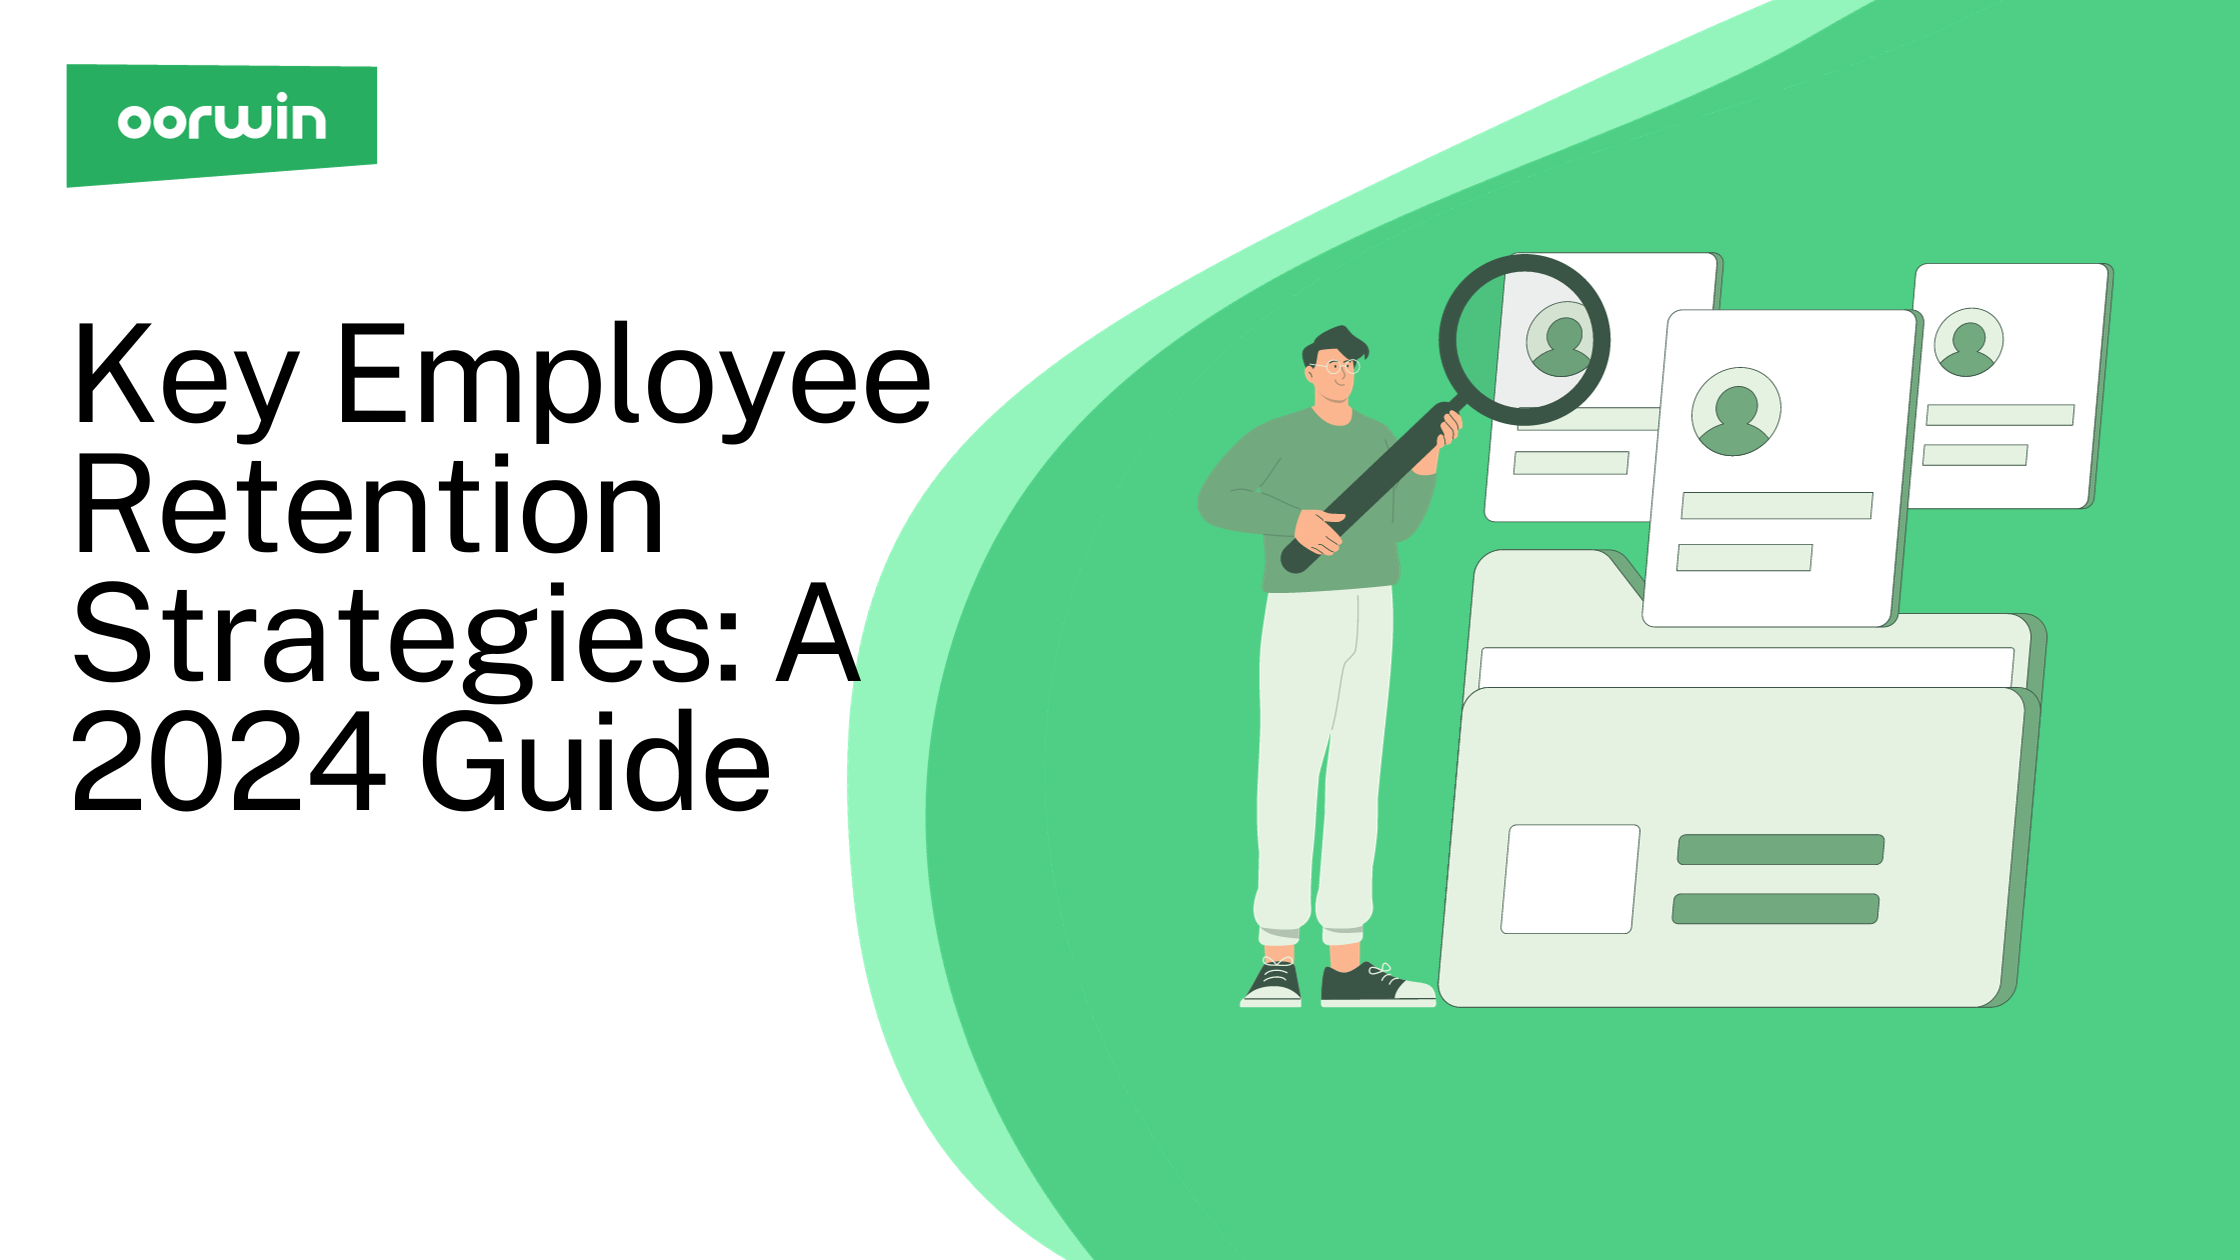 Key Employee Retention Strategies: A 2024 Guide